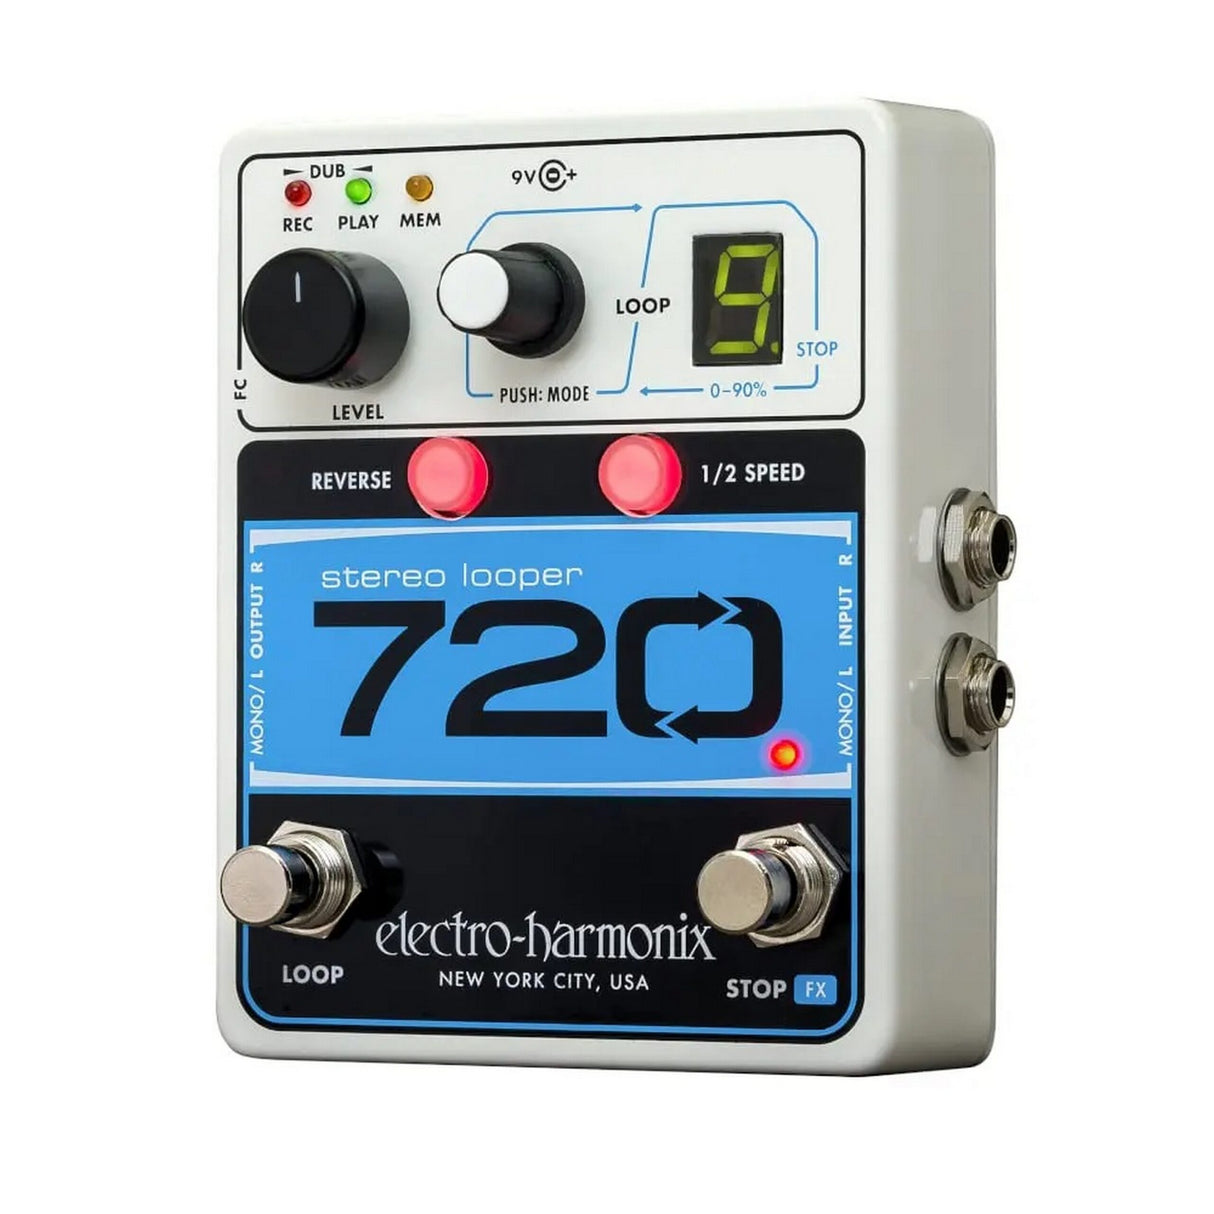 Electro-Harmonix 720 Stereo Looper Guitars Effects Pedal